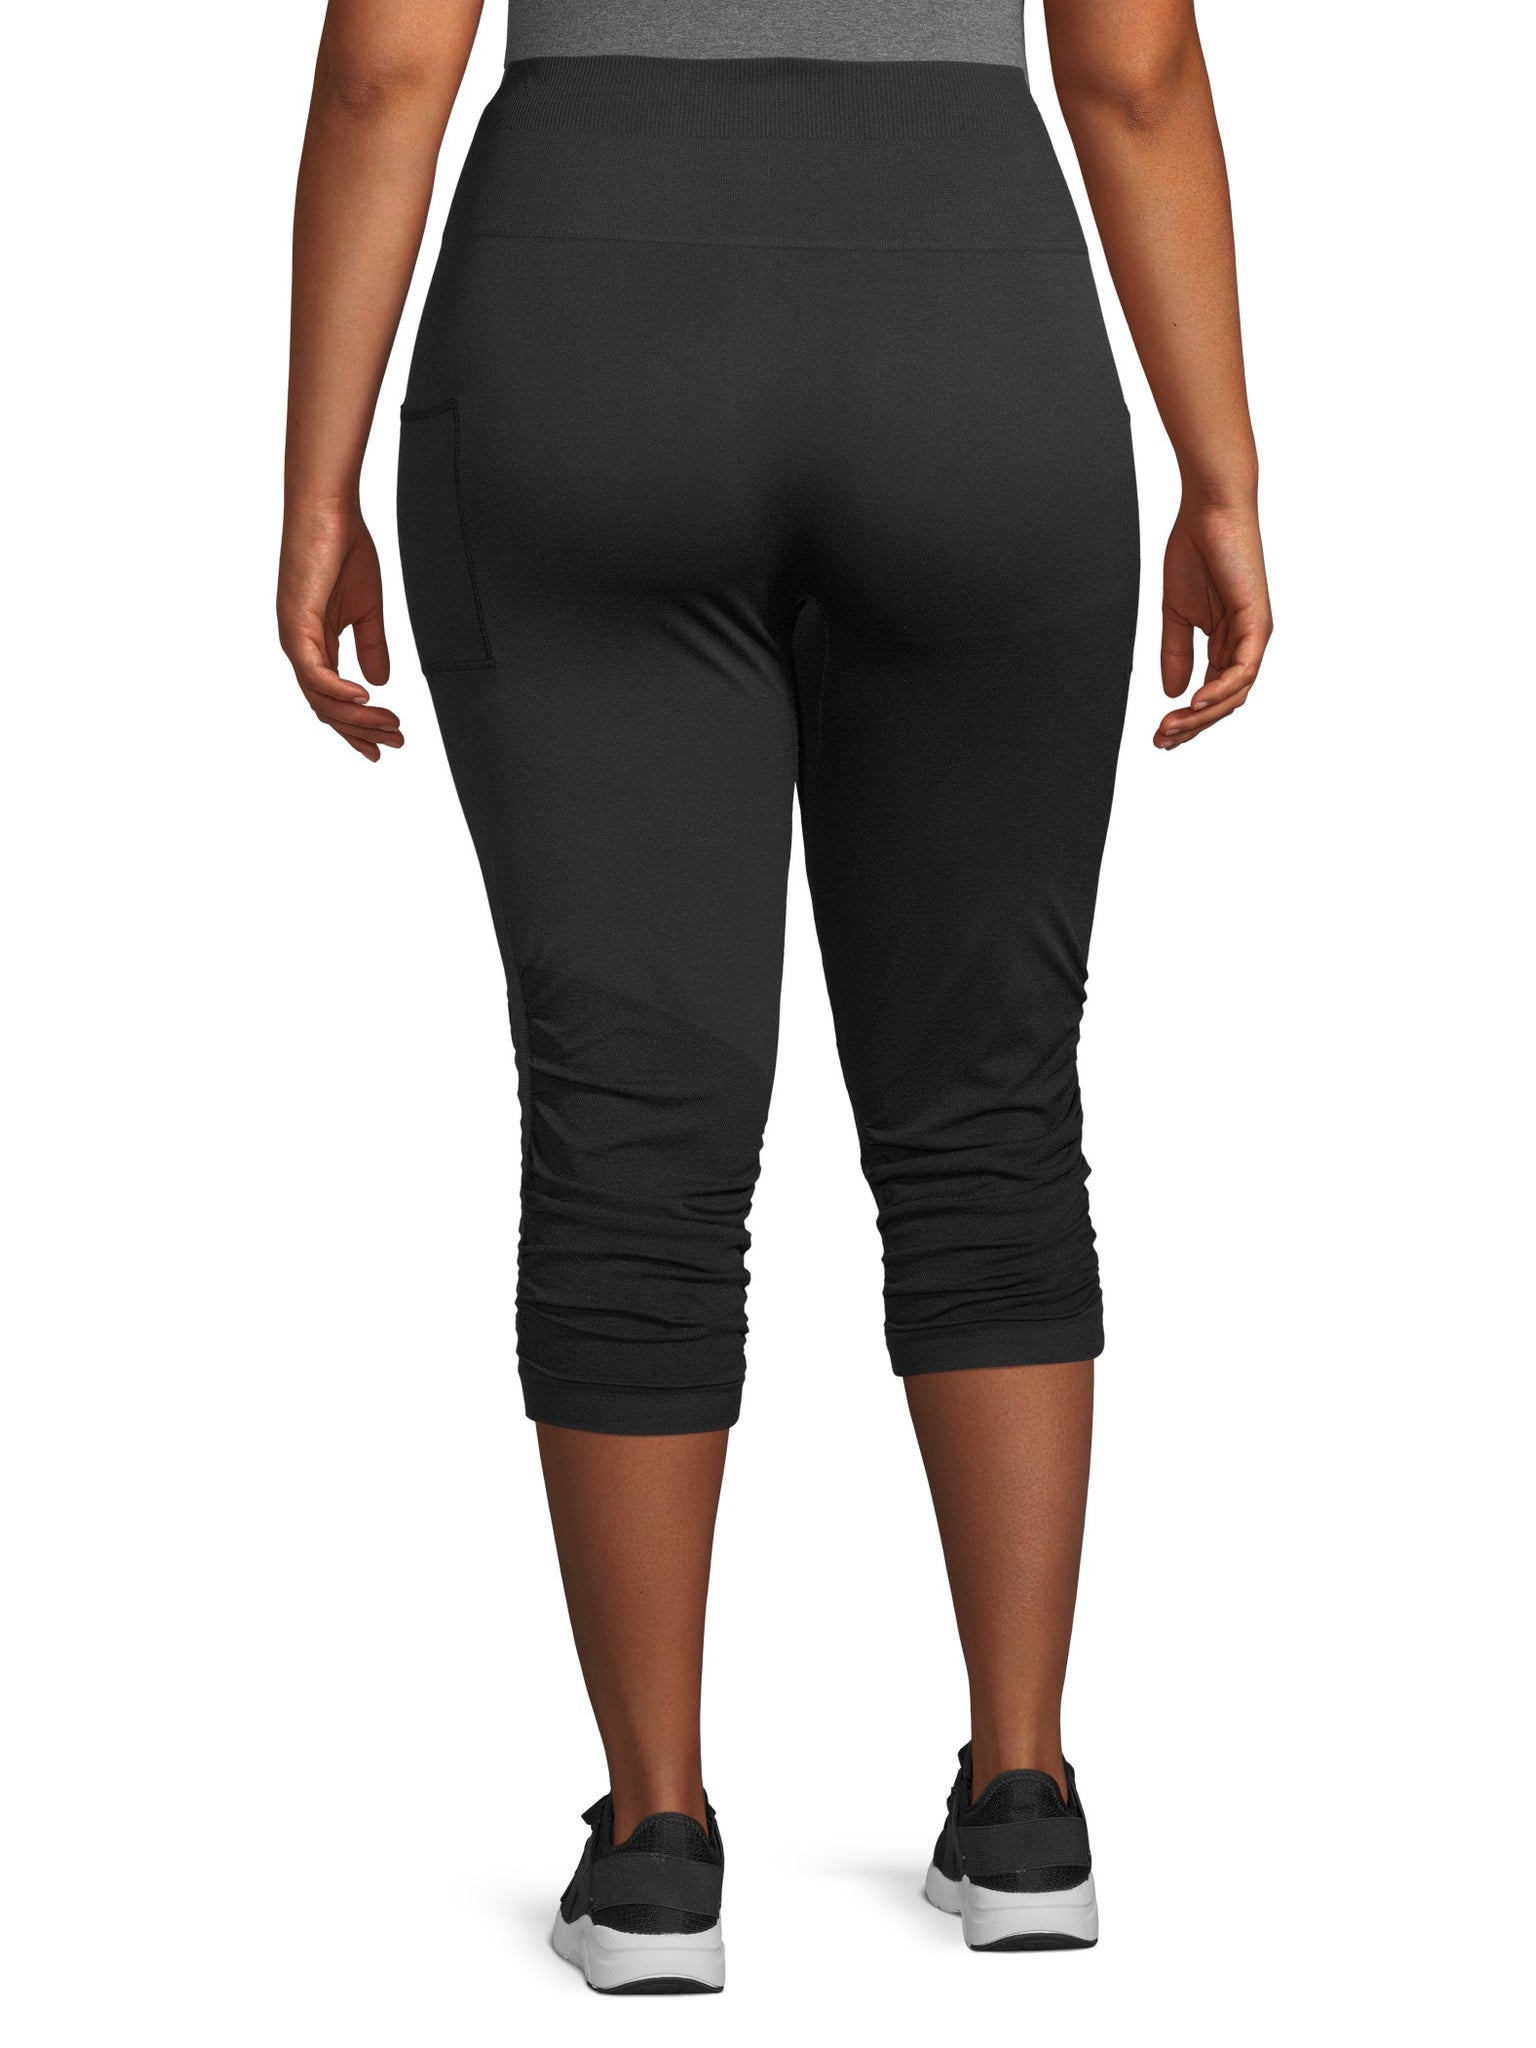 Buy Womens Plus Size Capri Yoga Pants Black 2X Online at